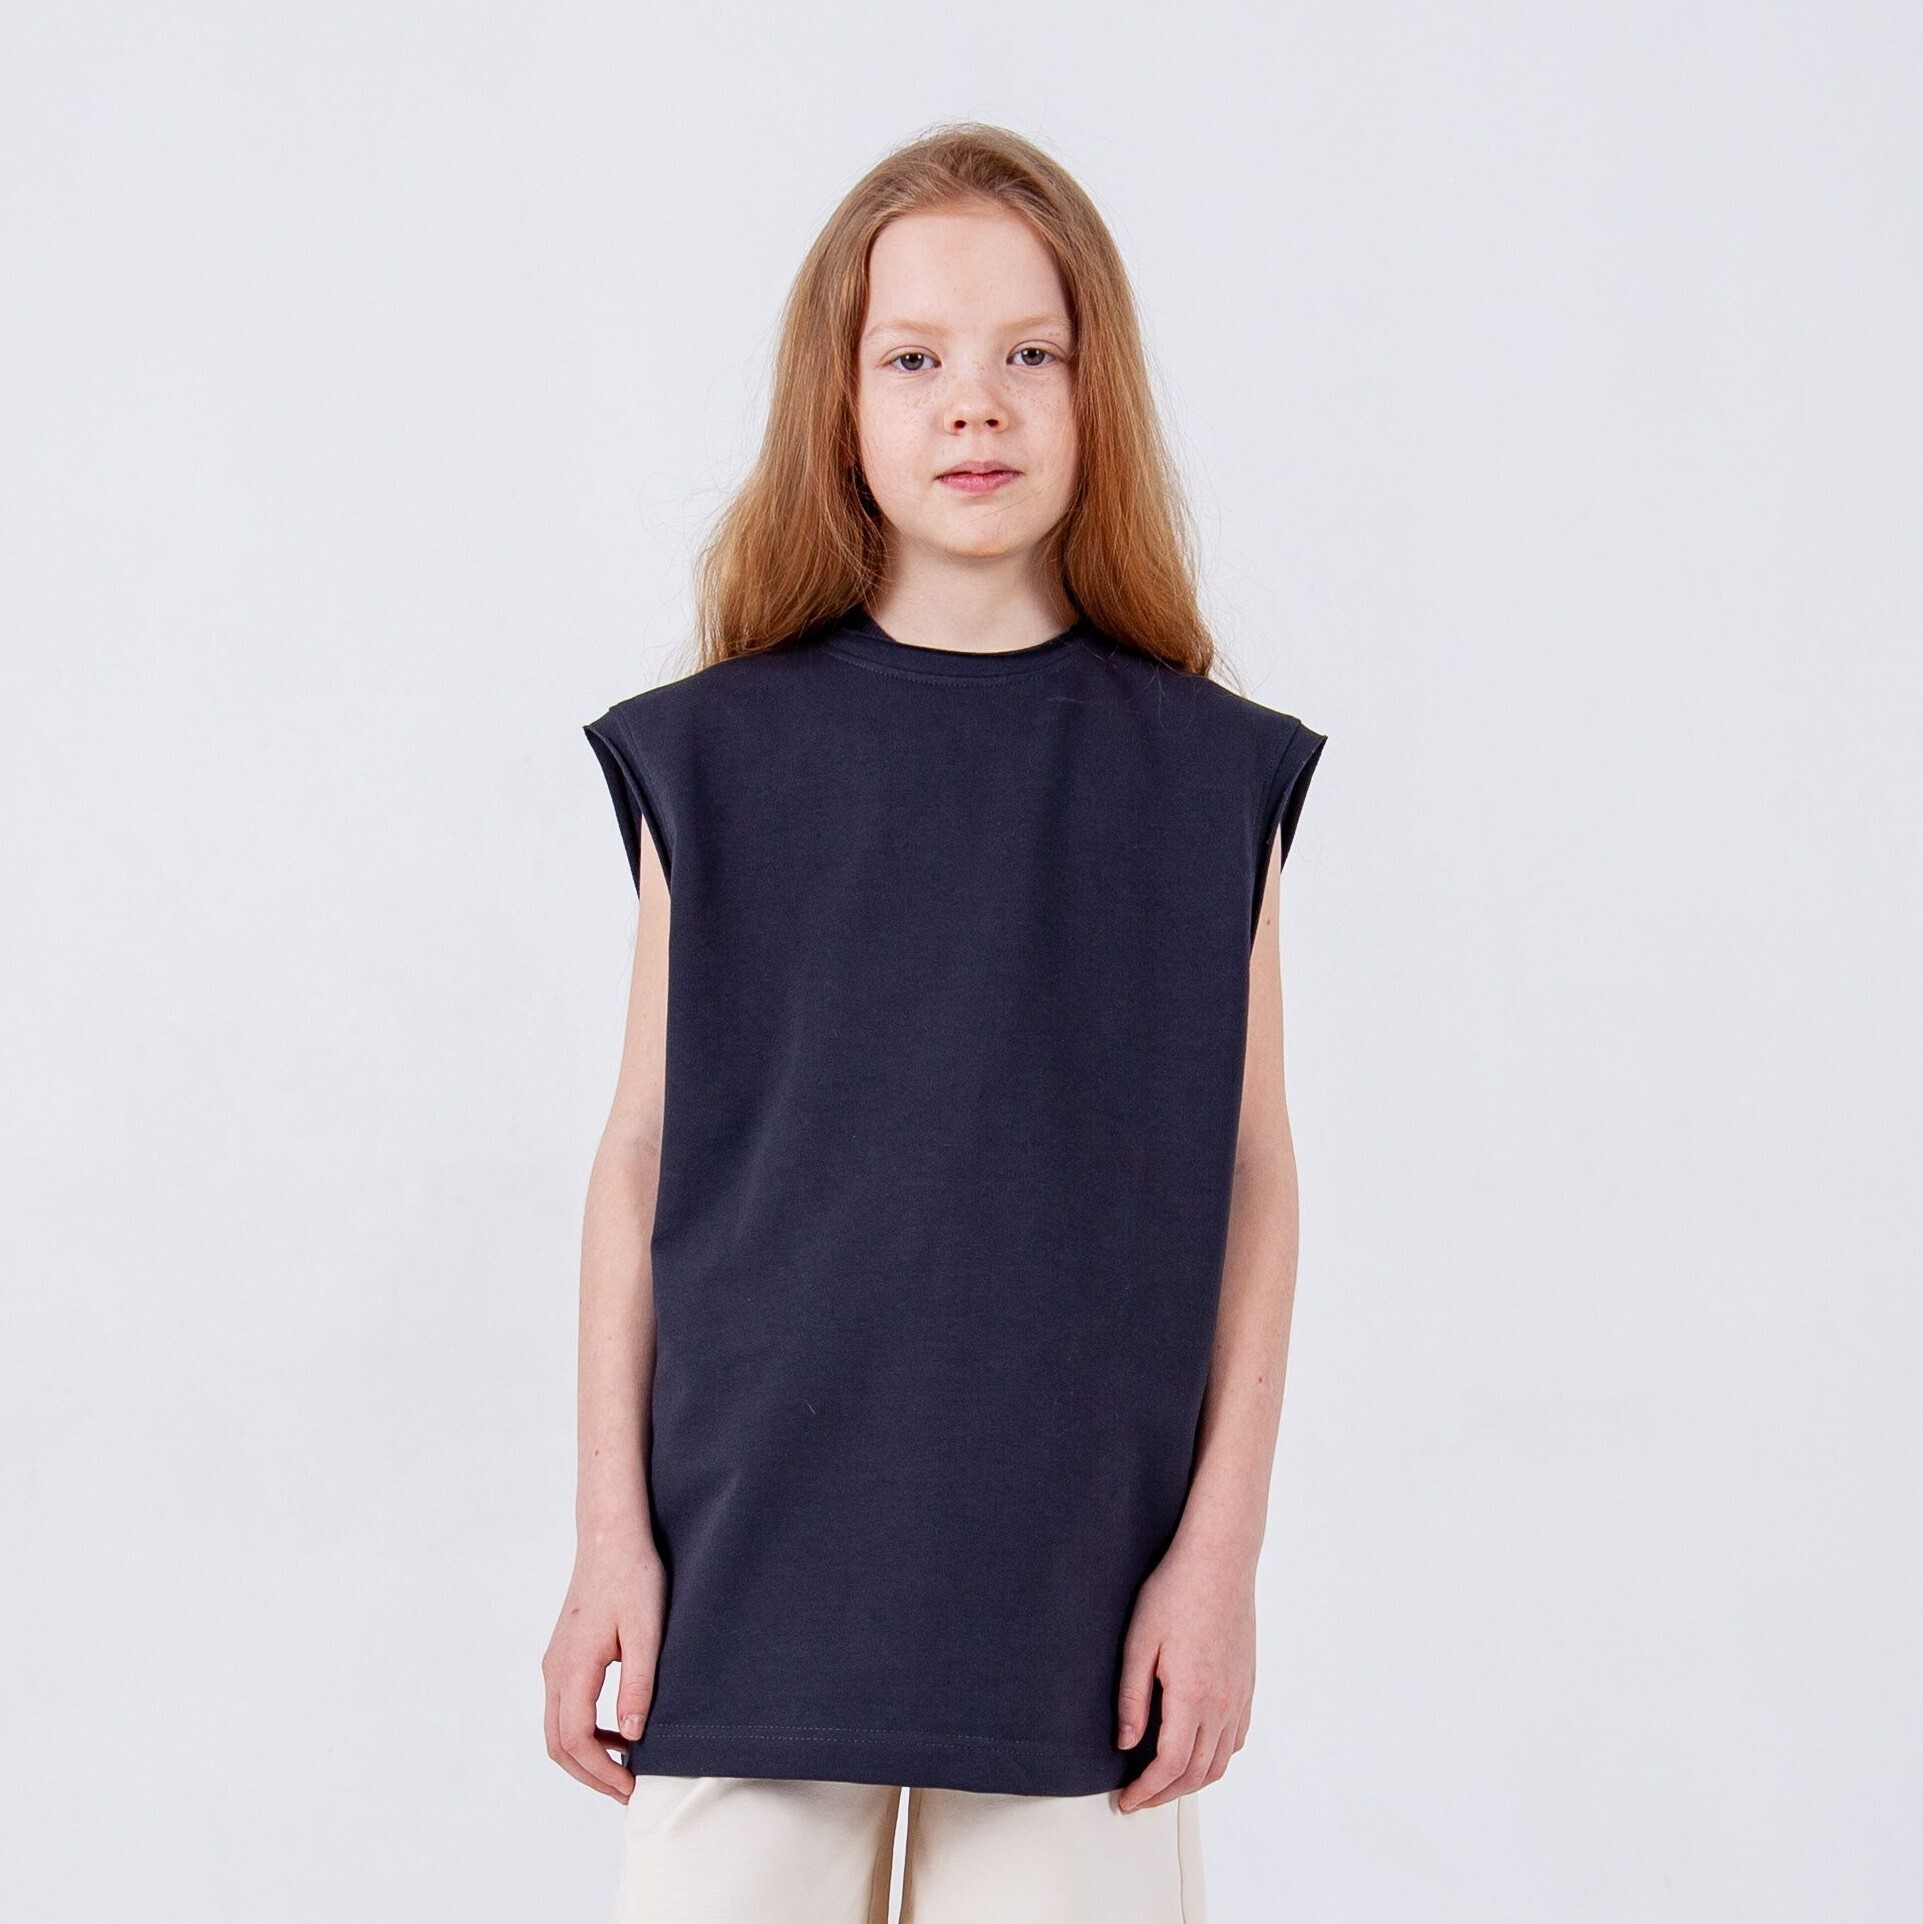 Sleeveless T-shirt for teens - GRAPHITE